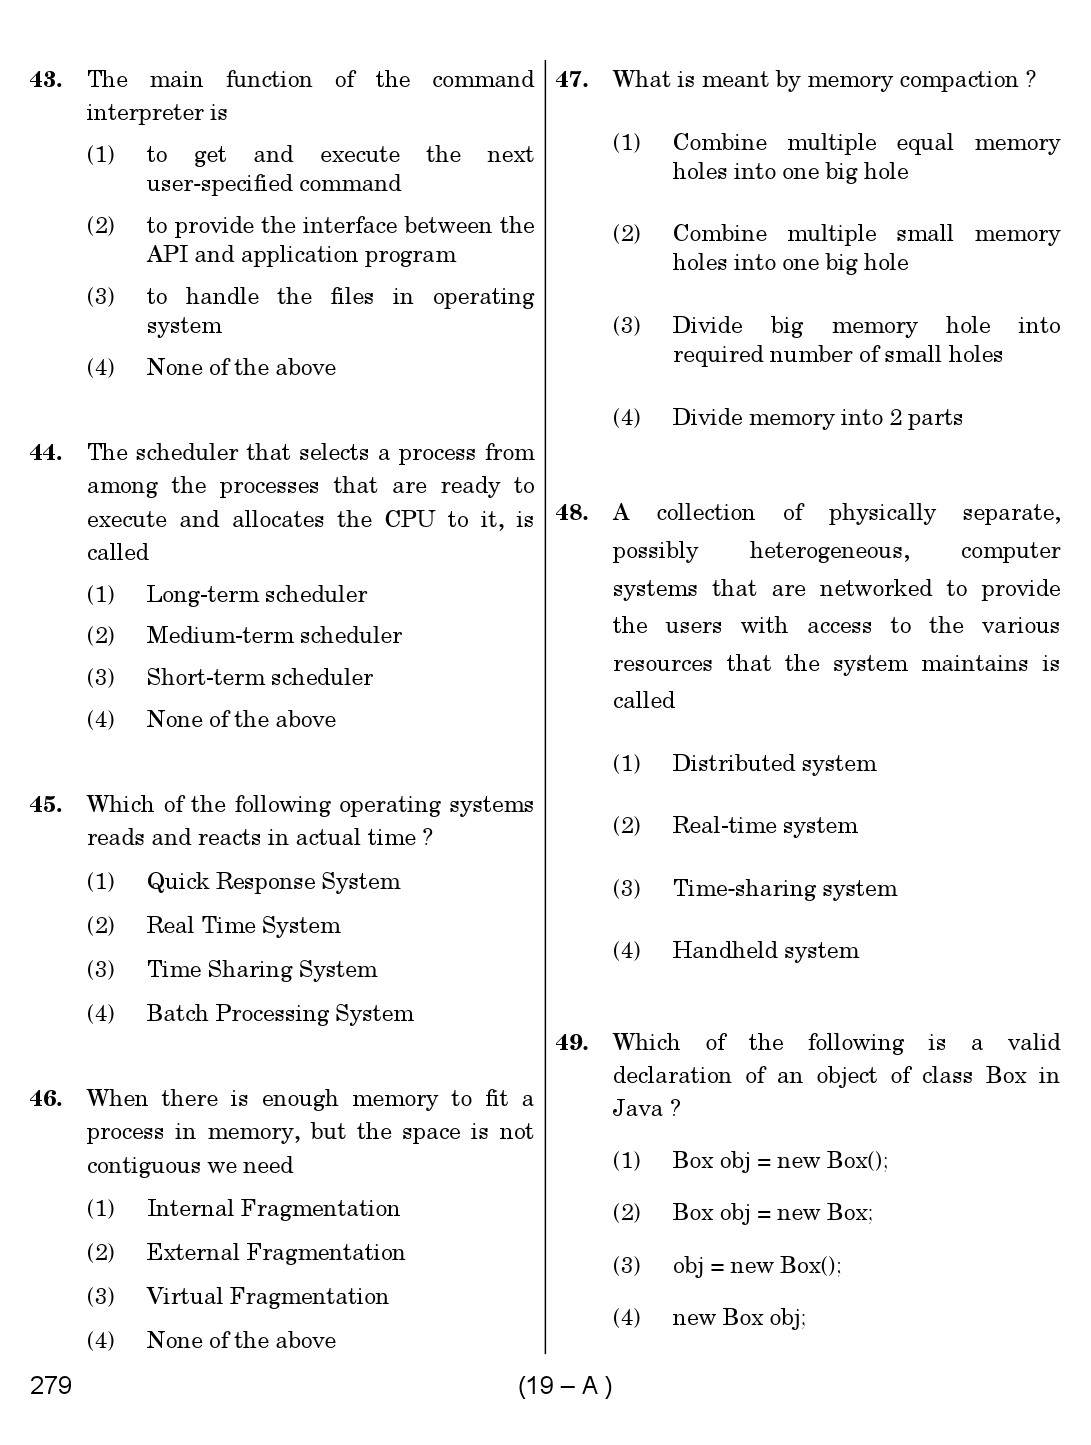 Karnataka PSC Computer Science Teachers Exam Sample Question Paper Subject code 279 19